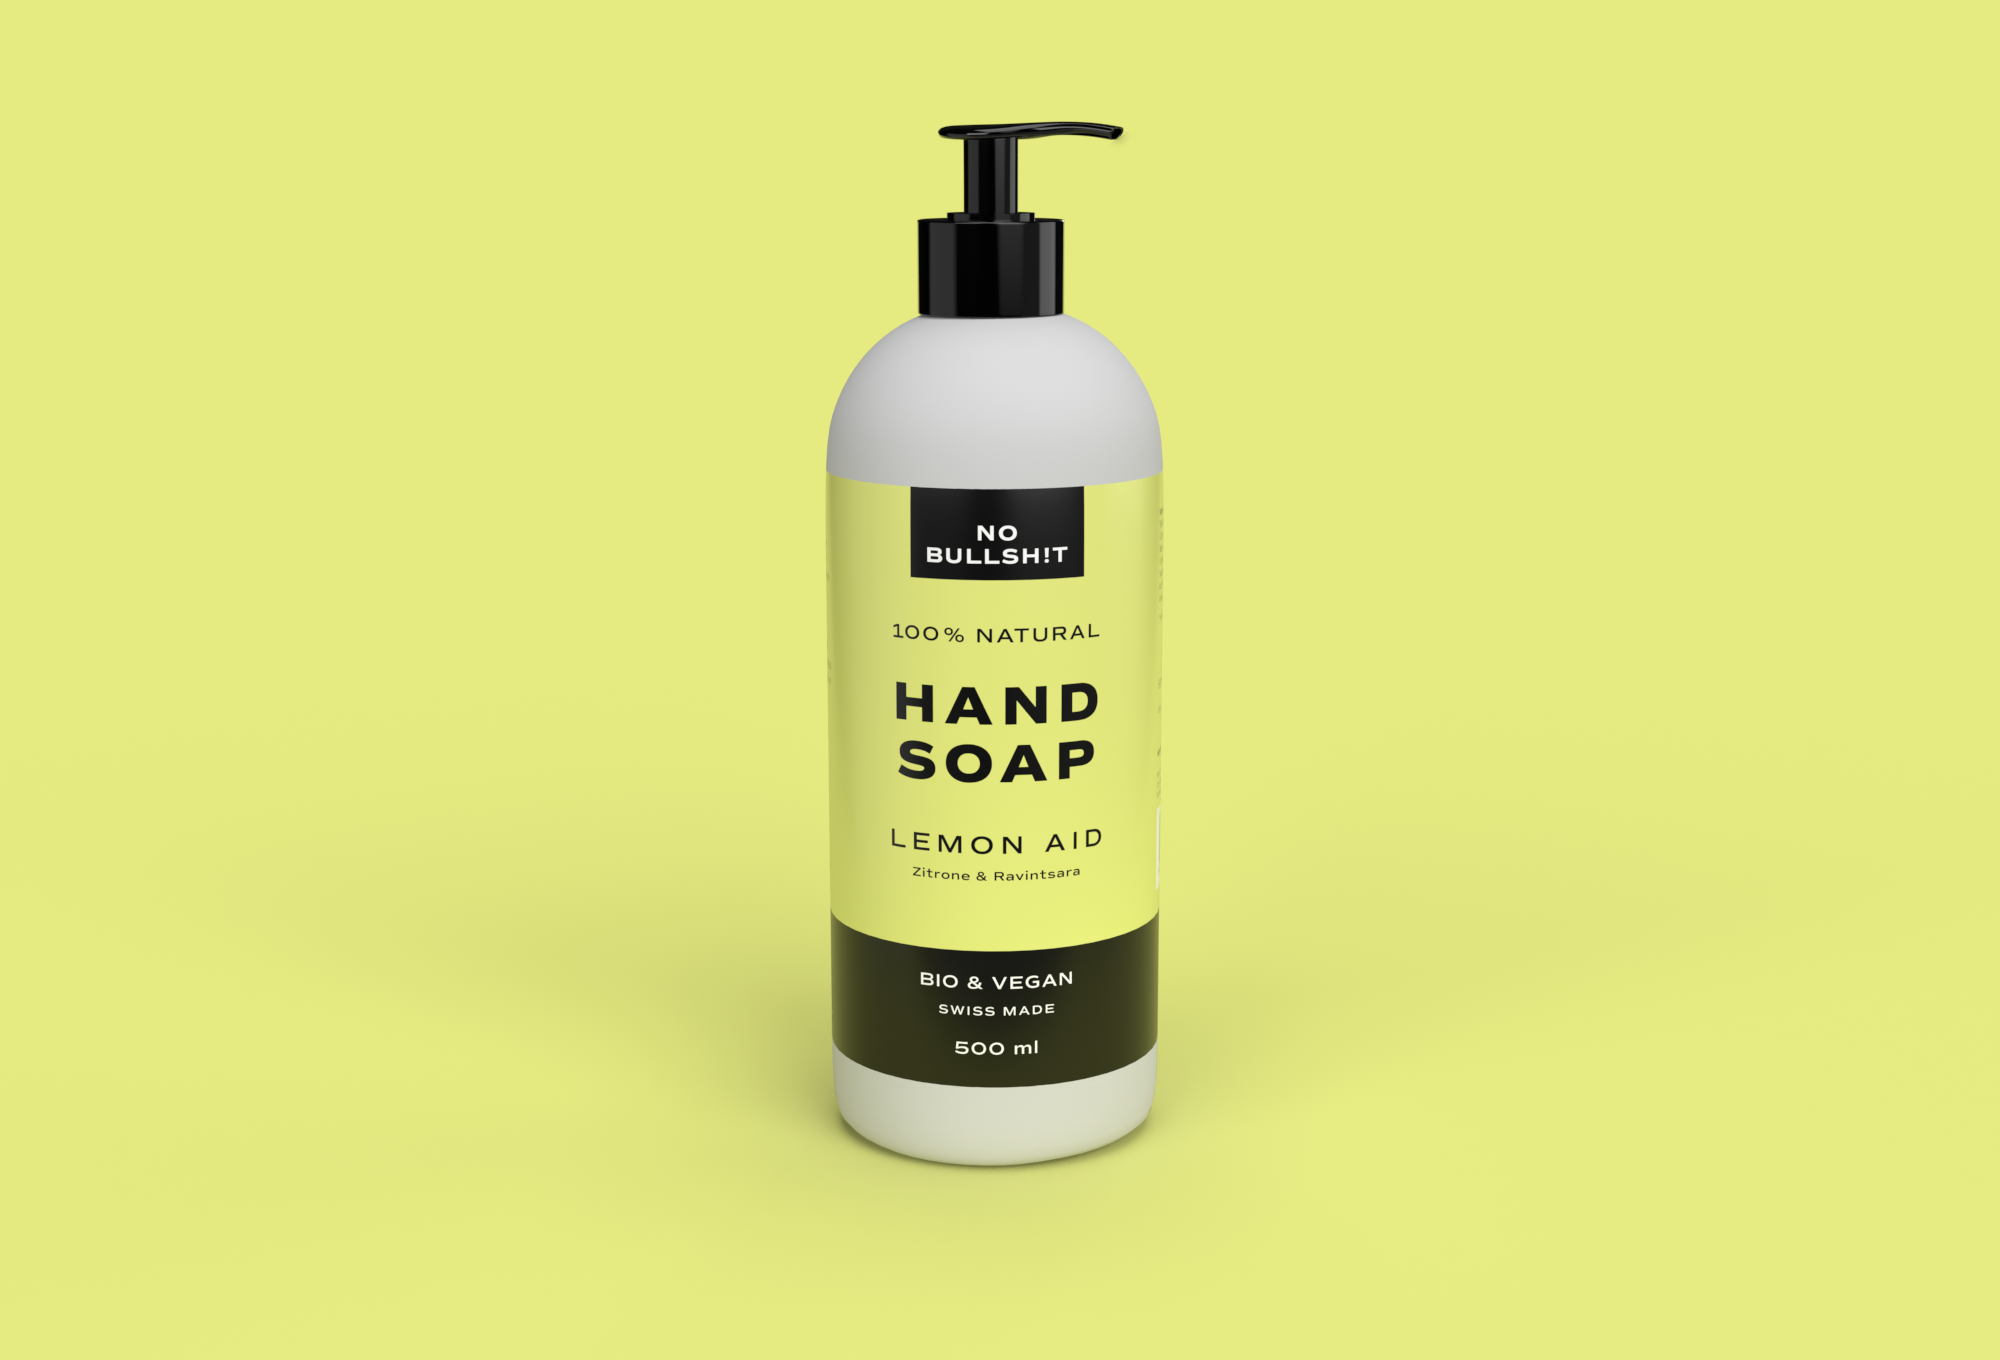 Hand Soap Lemon Aid